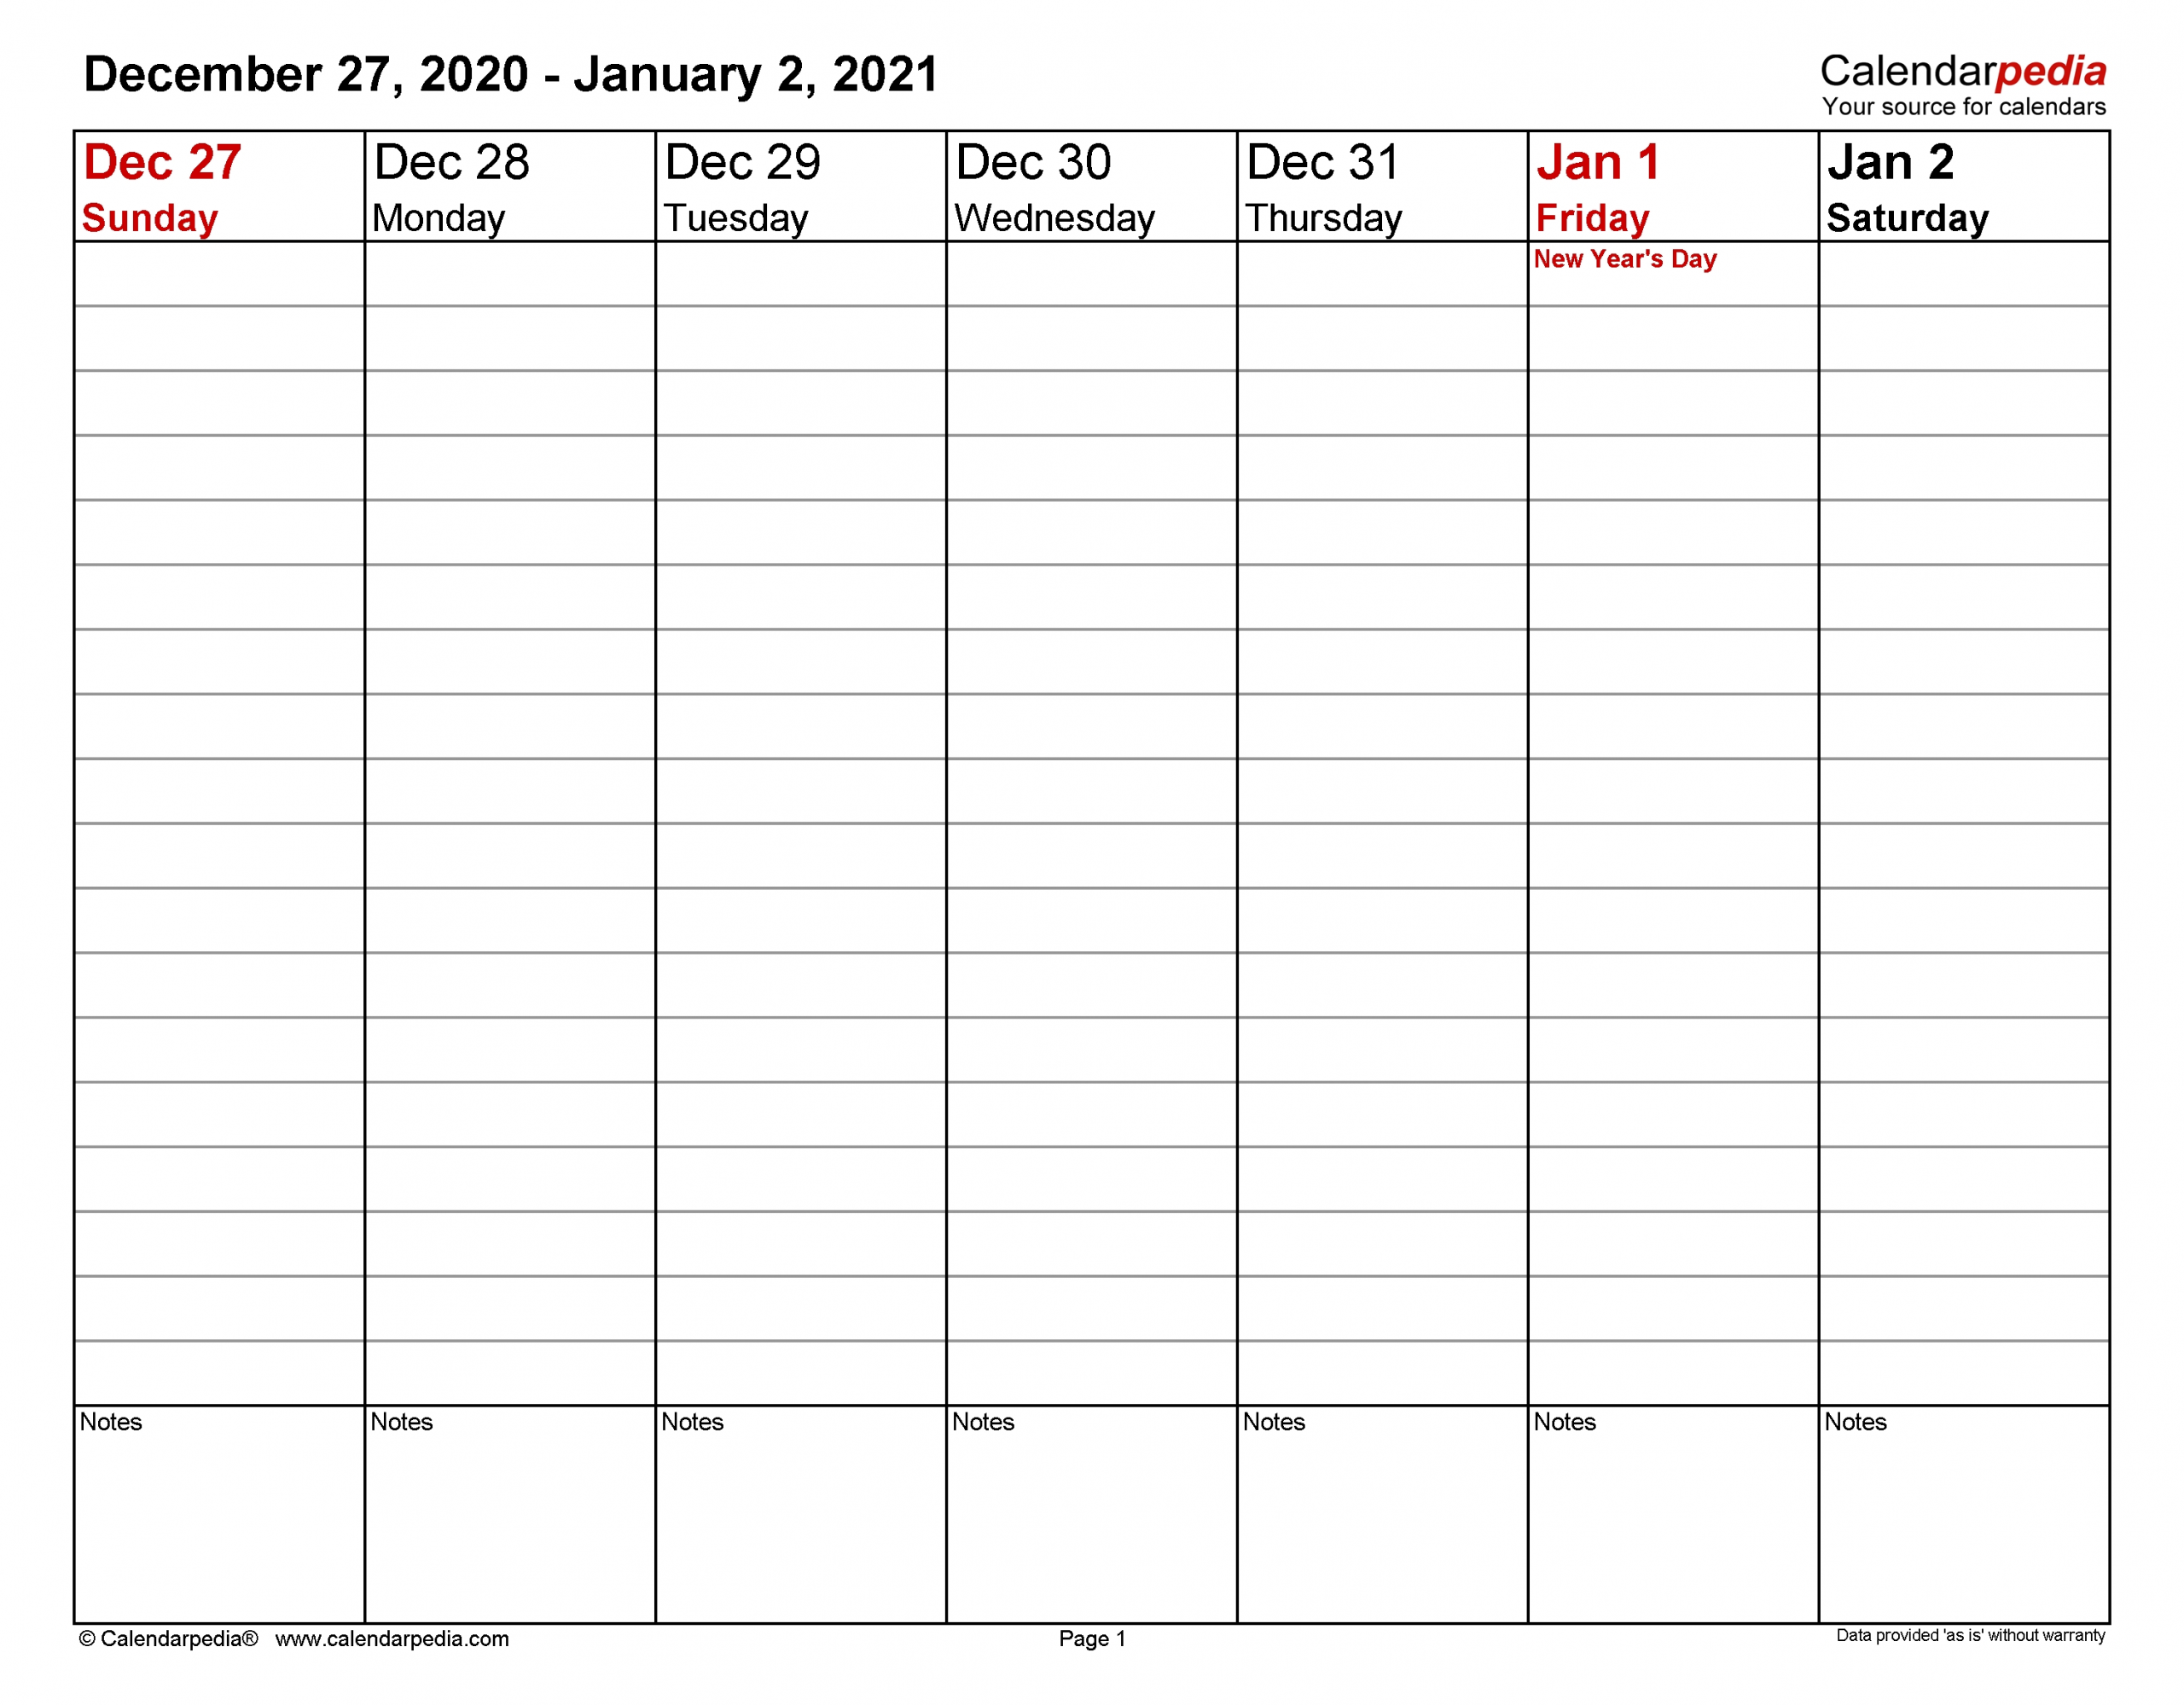 Weekly Calendars 2021 For Word - 12 Free Printable Templates  Printable Weekly Calendar Templates Free 2021